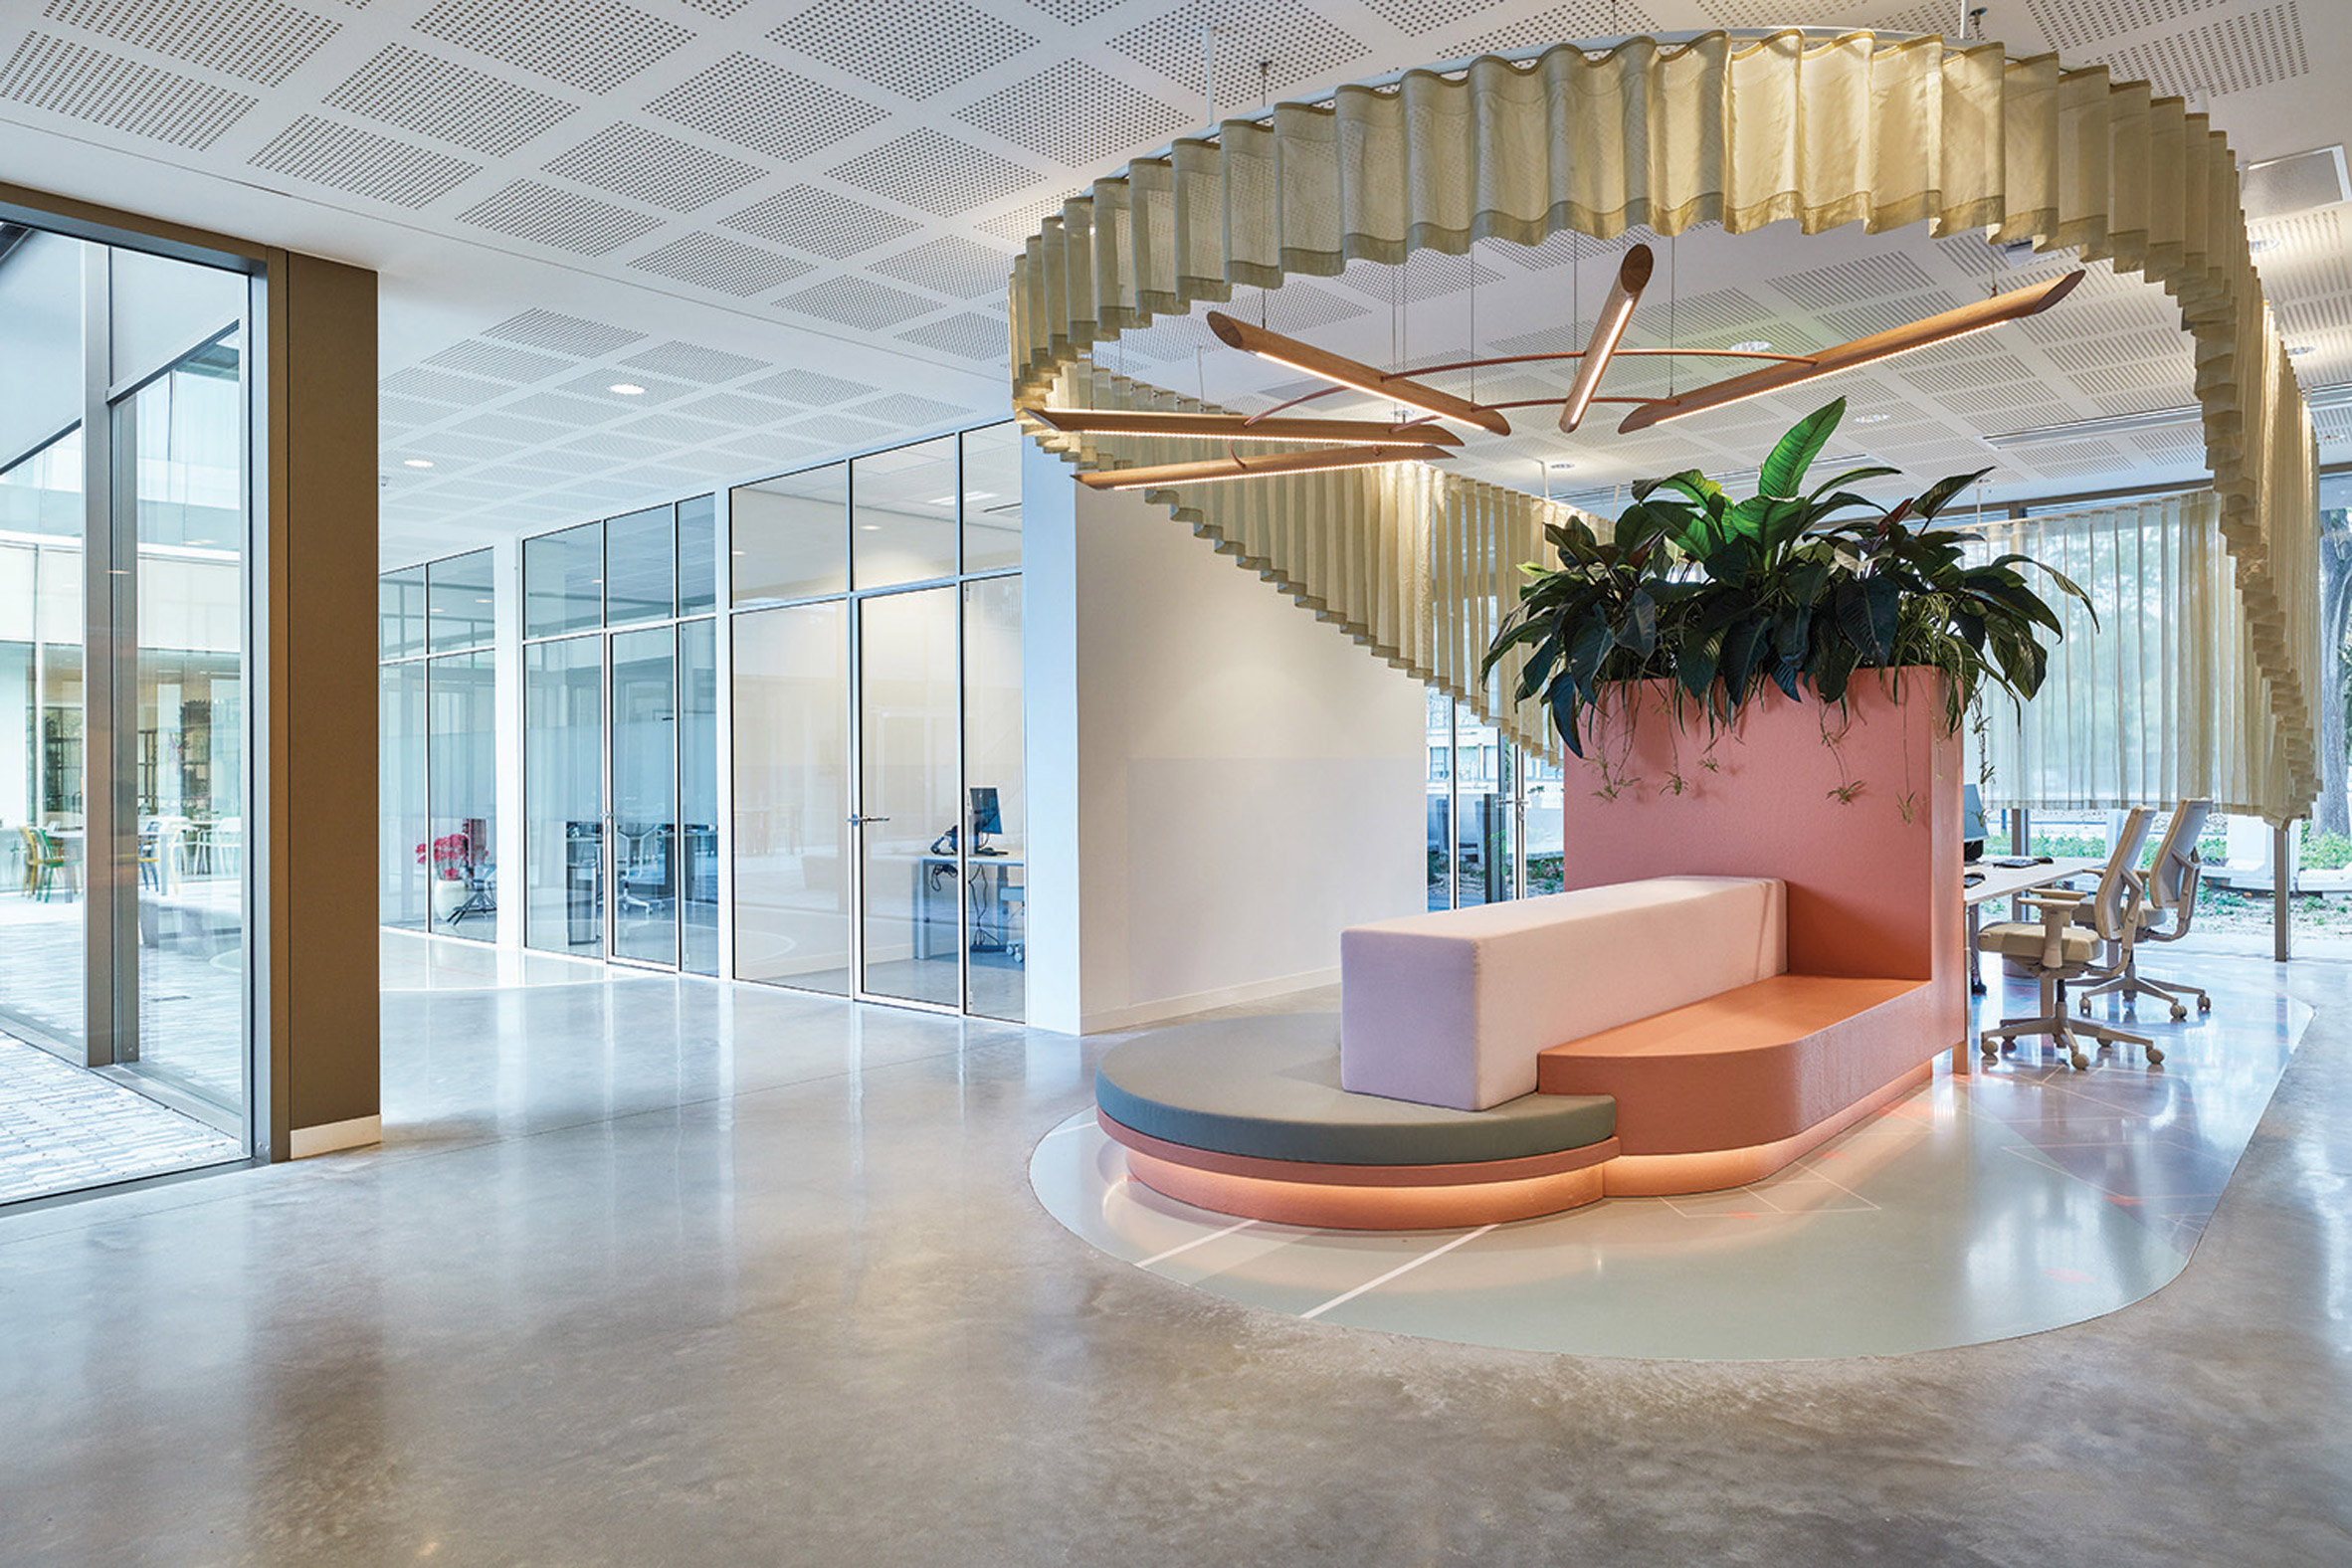 Staff offices for Domstate Zorghotel rehabilitation centre by by Van Eijk & Van der Lubbe, Utrecht